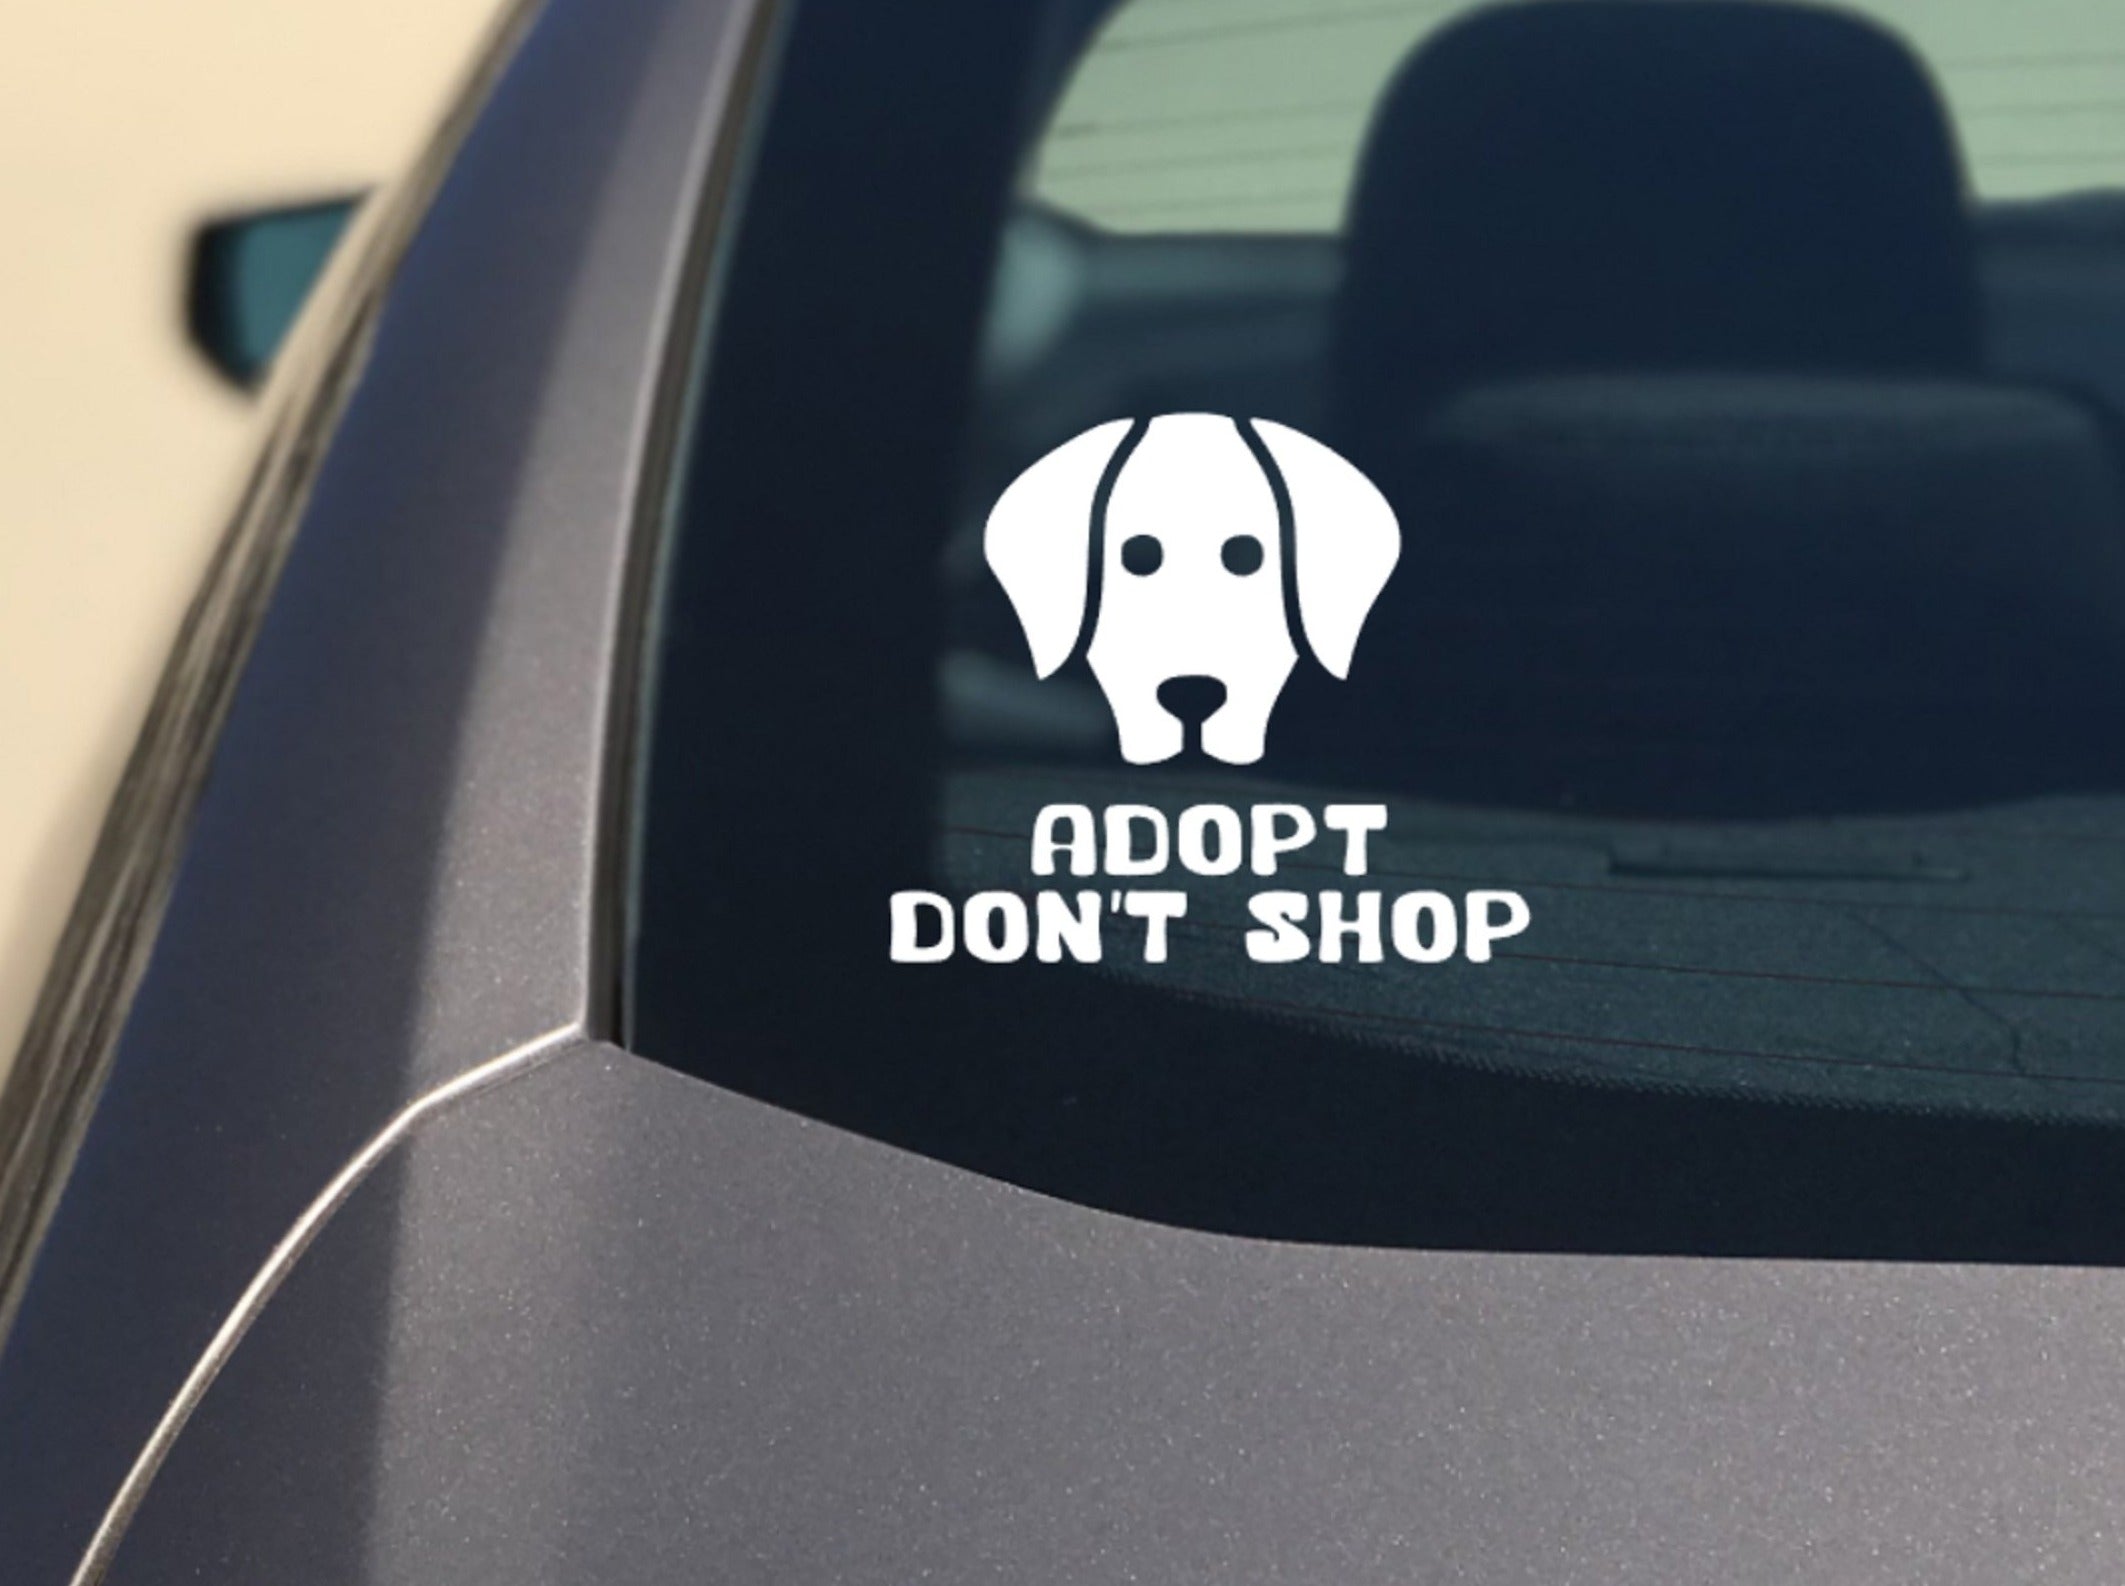 Adopt don't shop car sticker